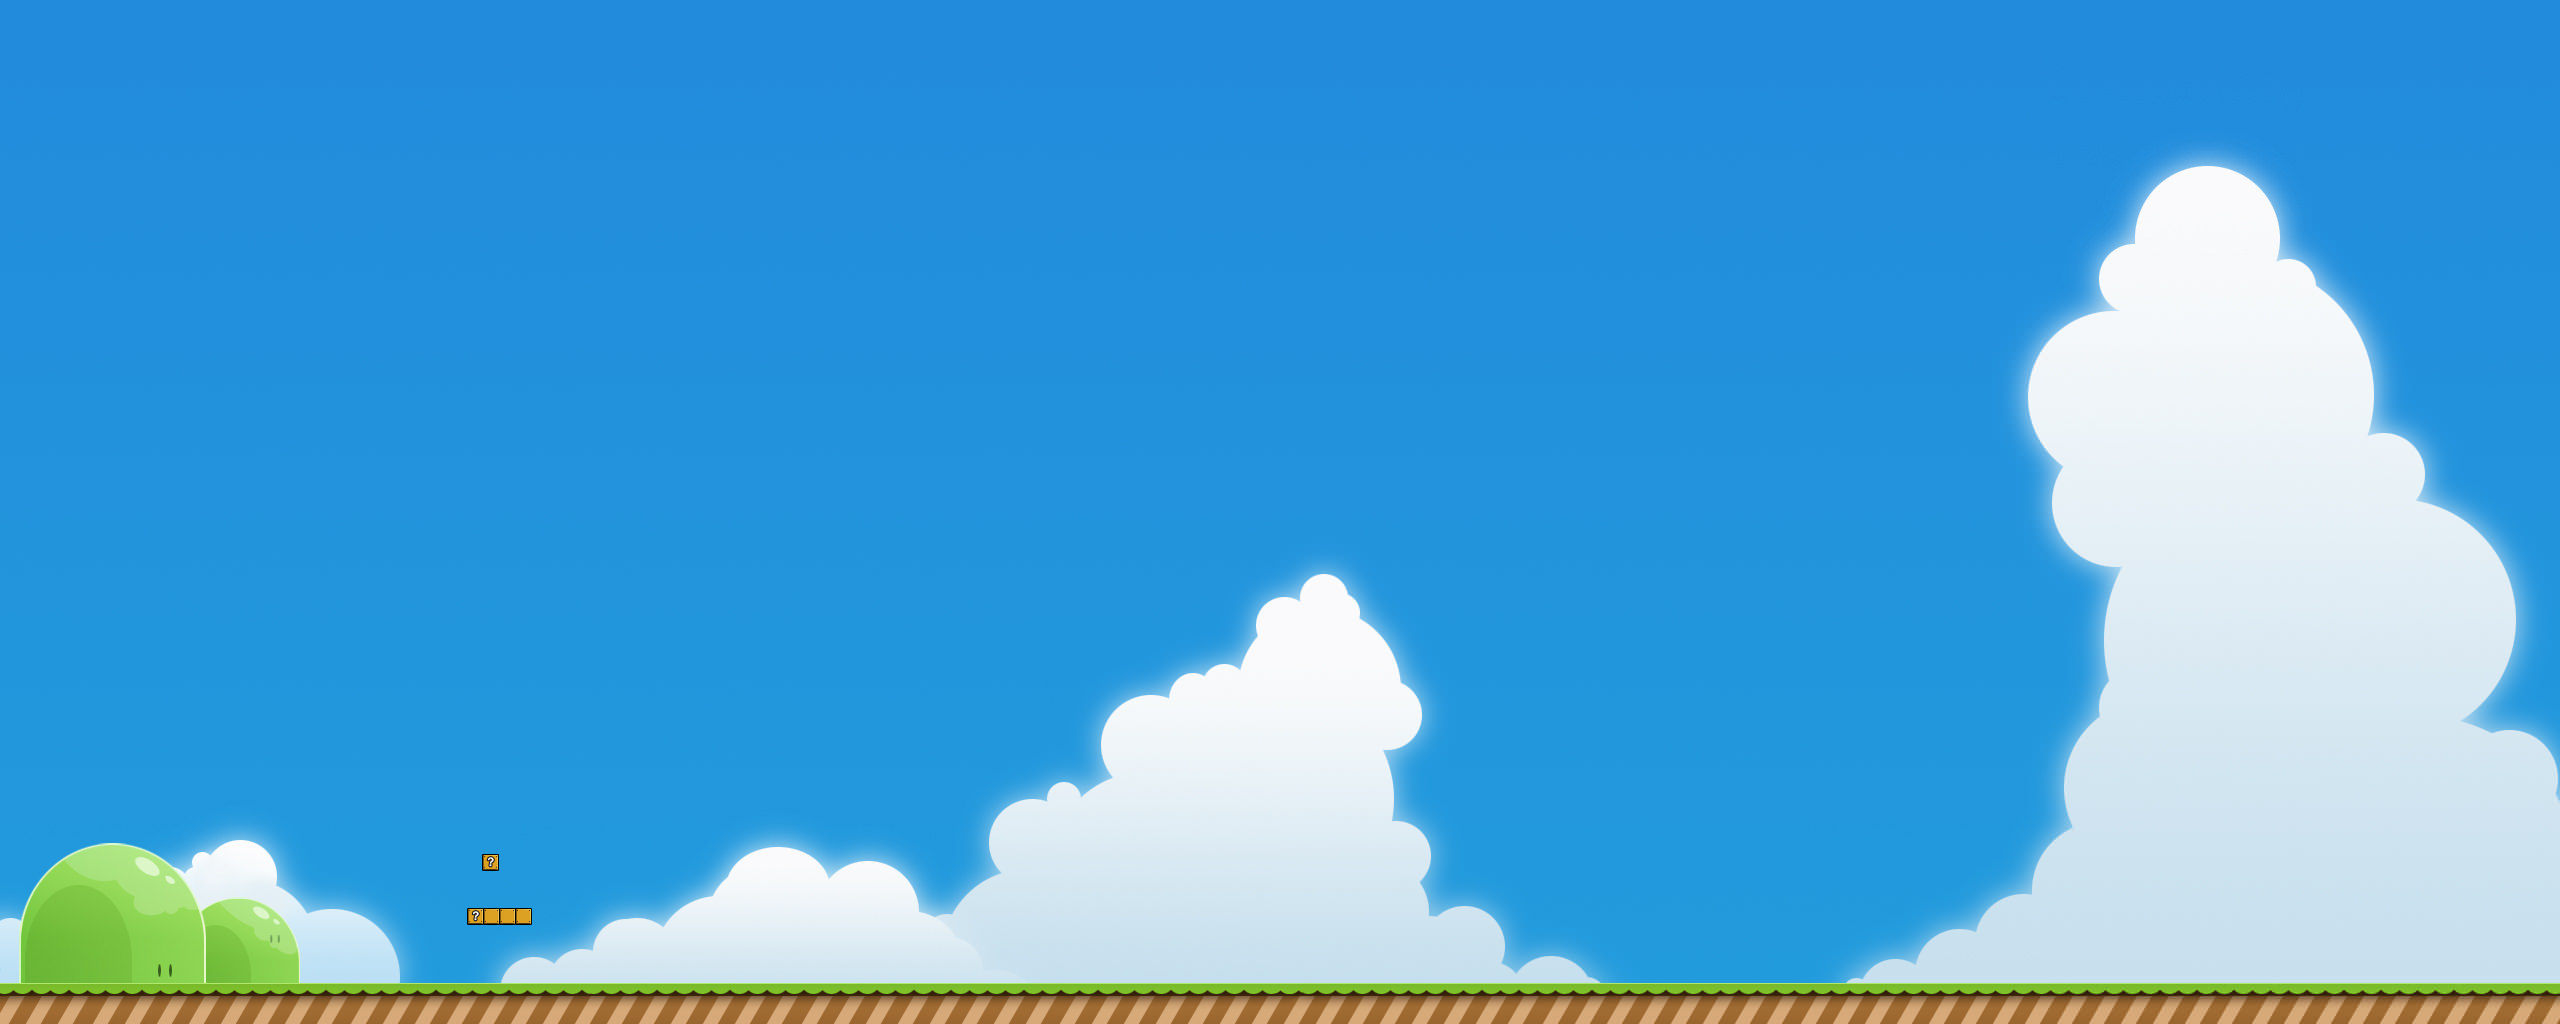 span wallpaper,sky,blue,daytime,cloud,aqua